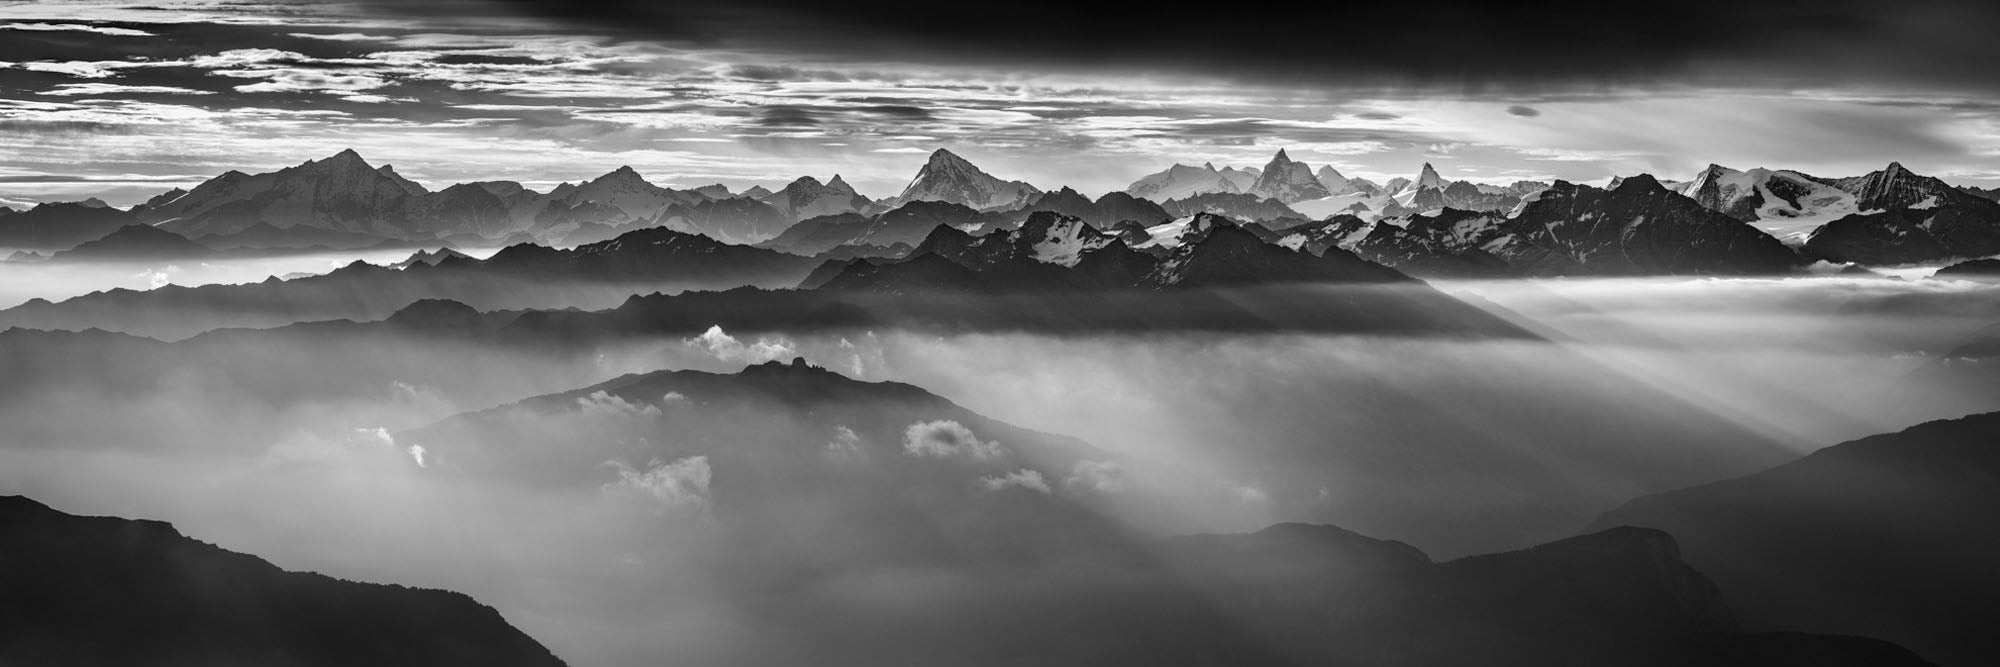 Les alpes Valaisannes, Switzerland - Petra Gut Contemporary AG Thomas Crauwels